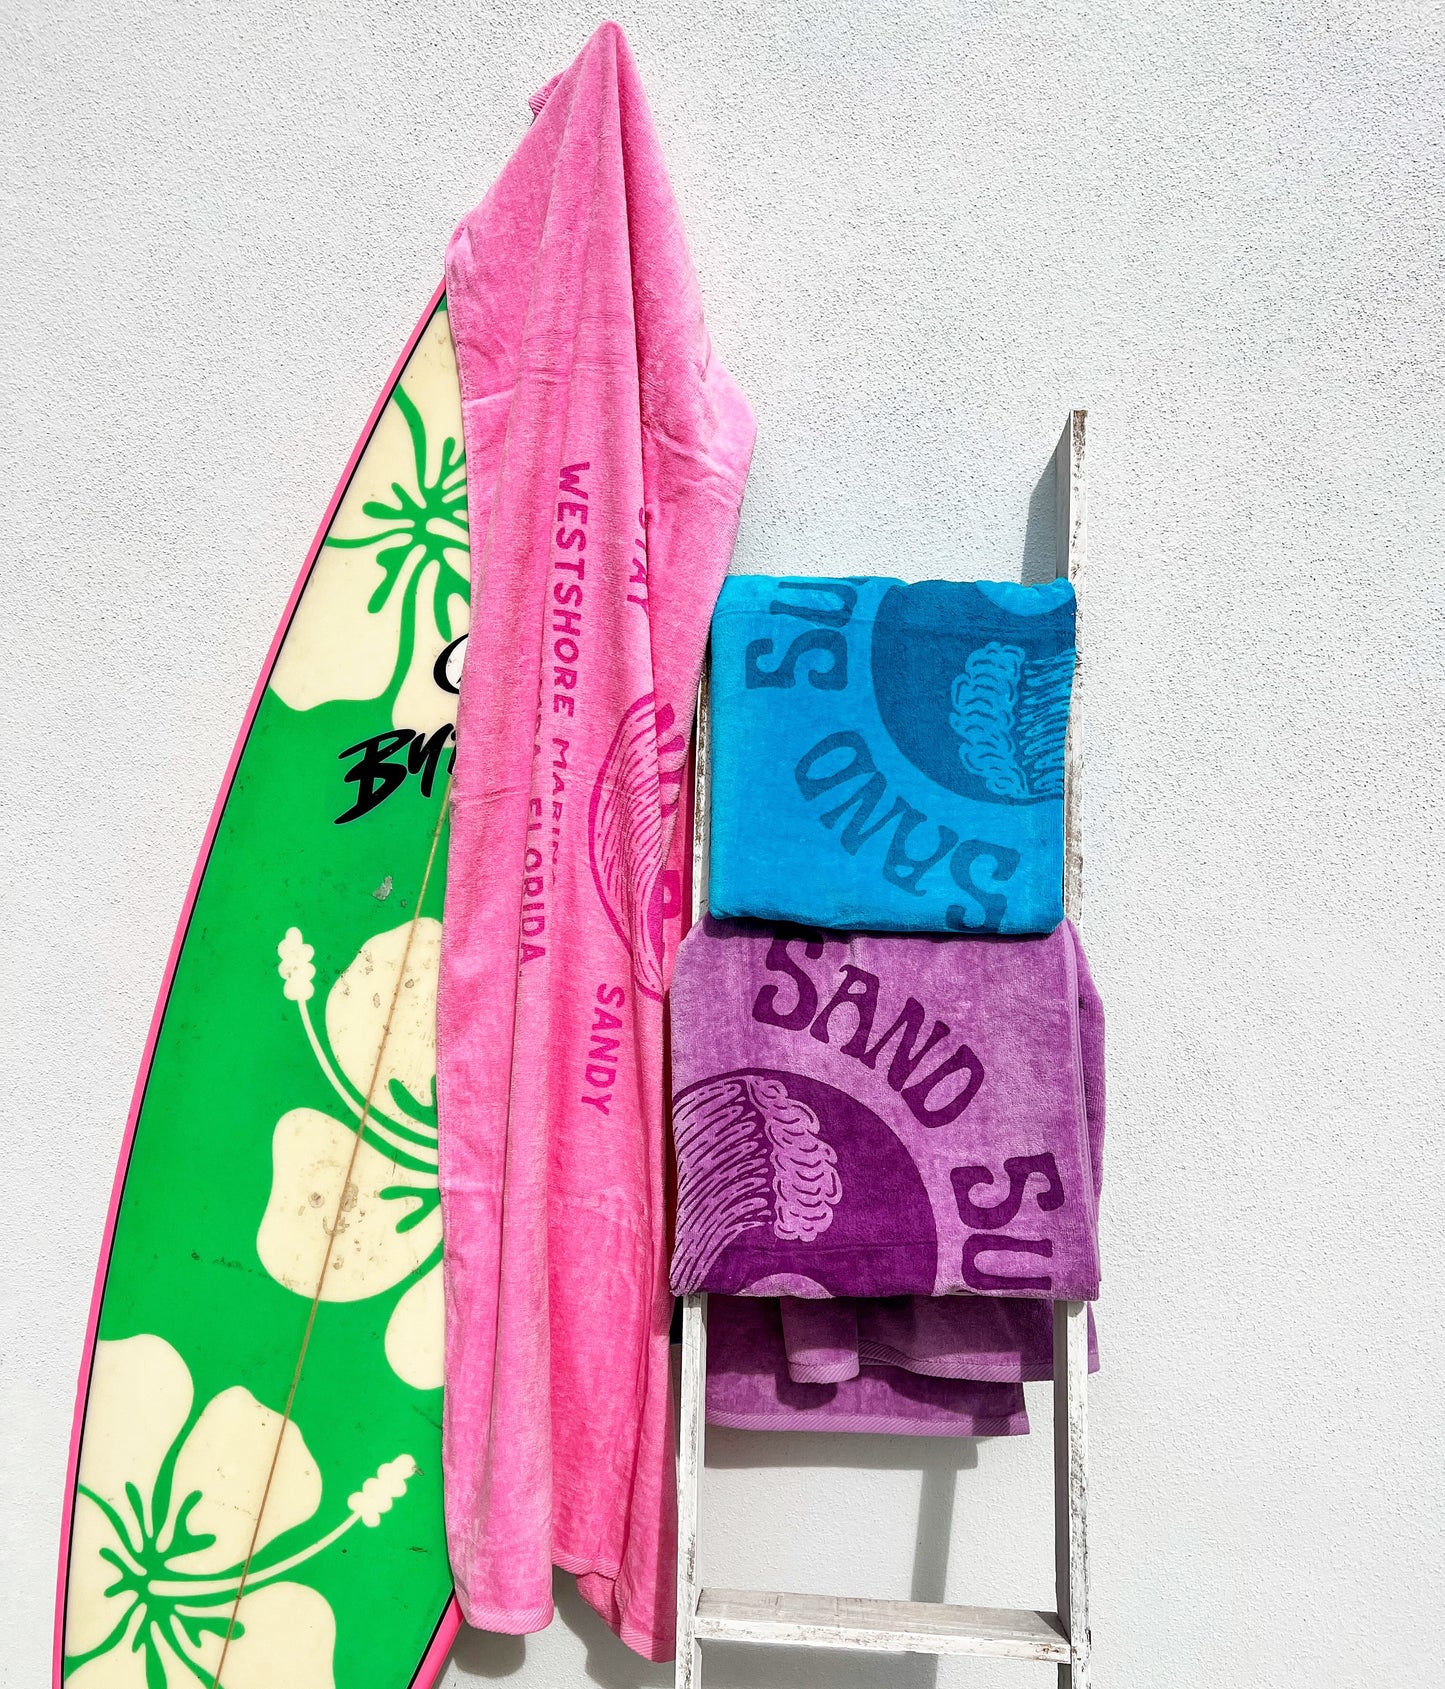 Sand Surf Co. Yin Yang Towel - Regular